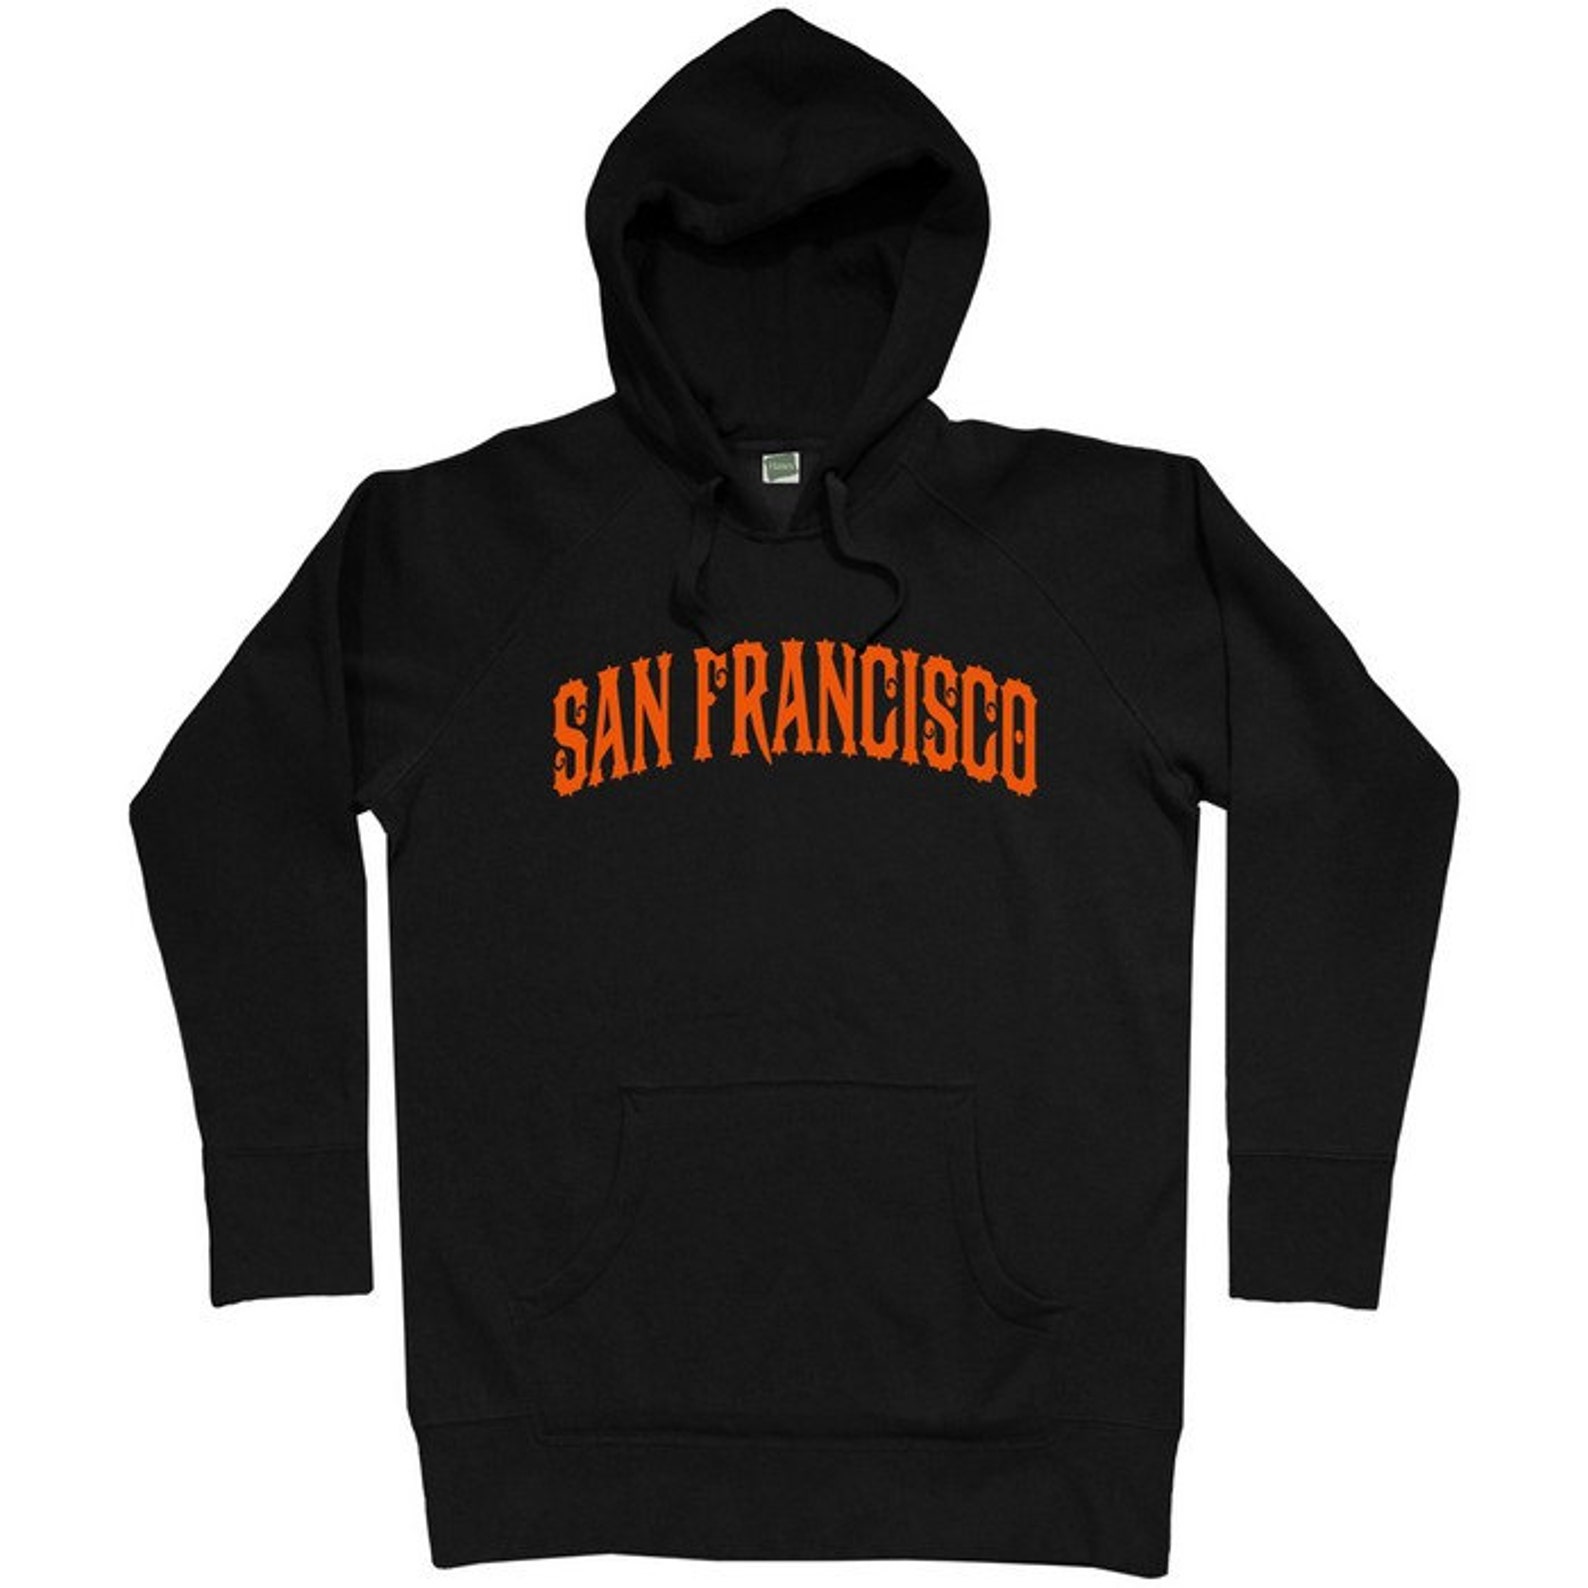 San Francisco Hoodie Men S M L XL 2x SF Hoody Sweatshirt | Etsy